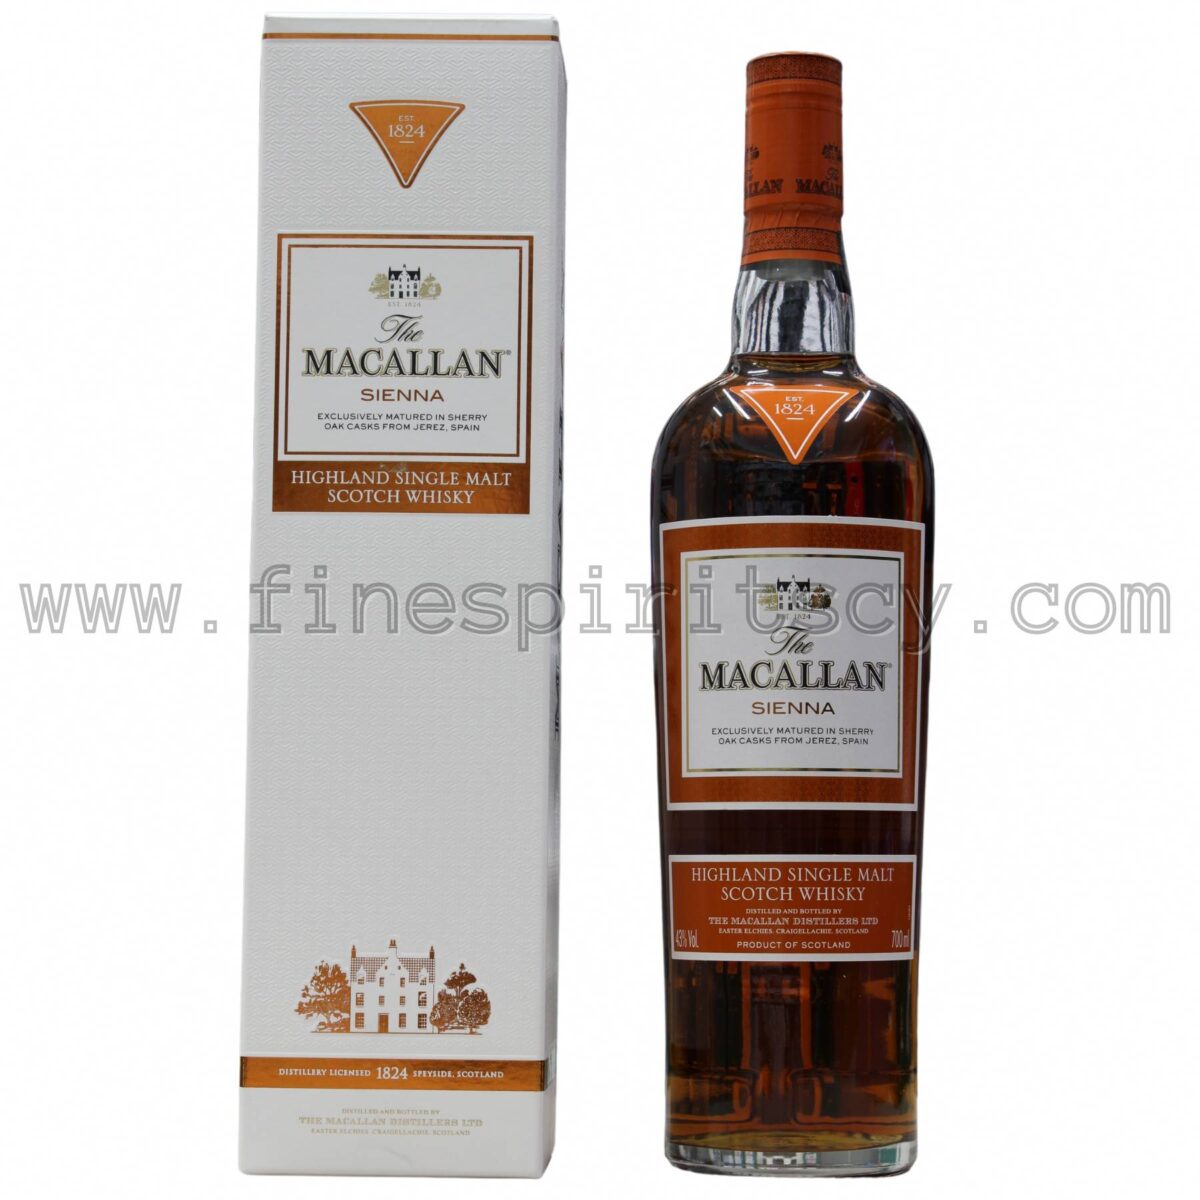 Macallan Sienna Speyside Collectors Open Box Bottle Inside Case Highland Single Malt